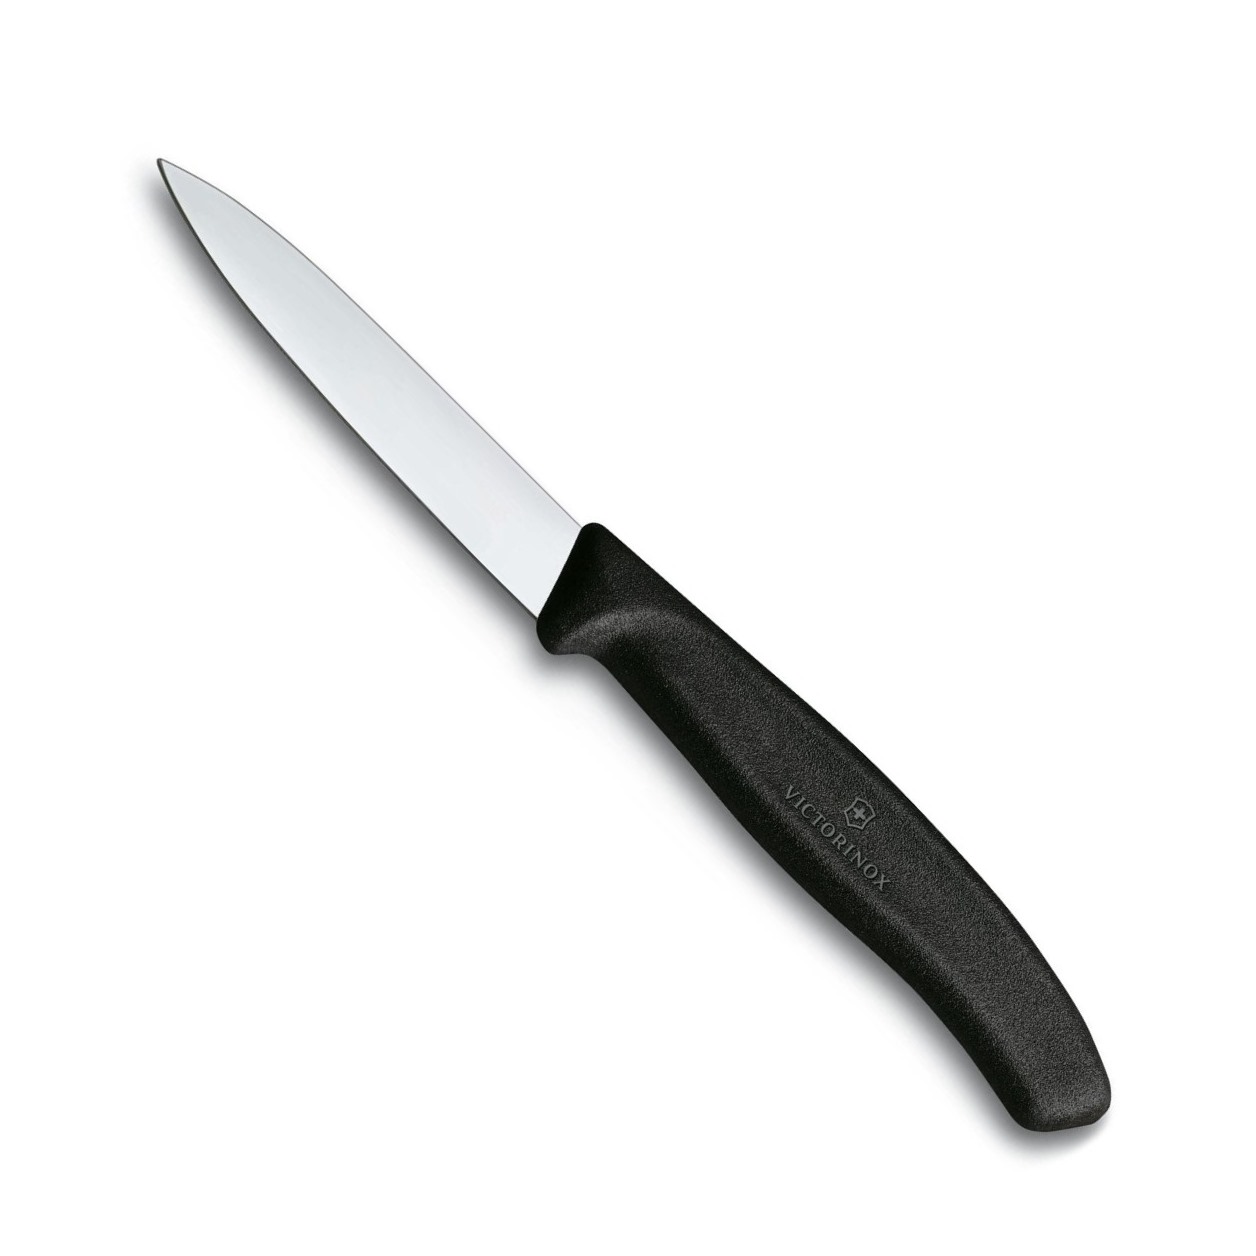 Nůž na zeleninu SWISS CLASSIC, černý 8 cm - Victorinox